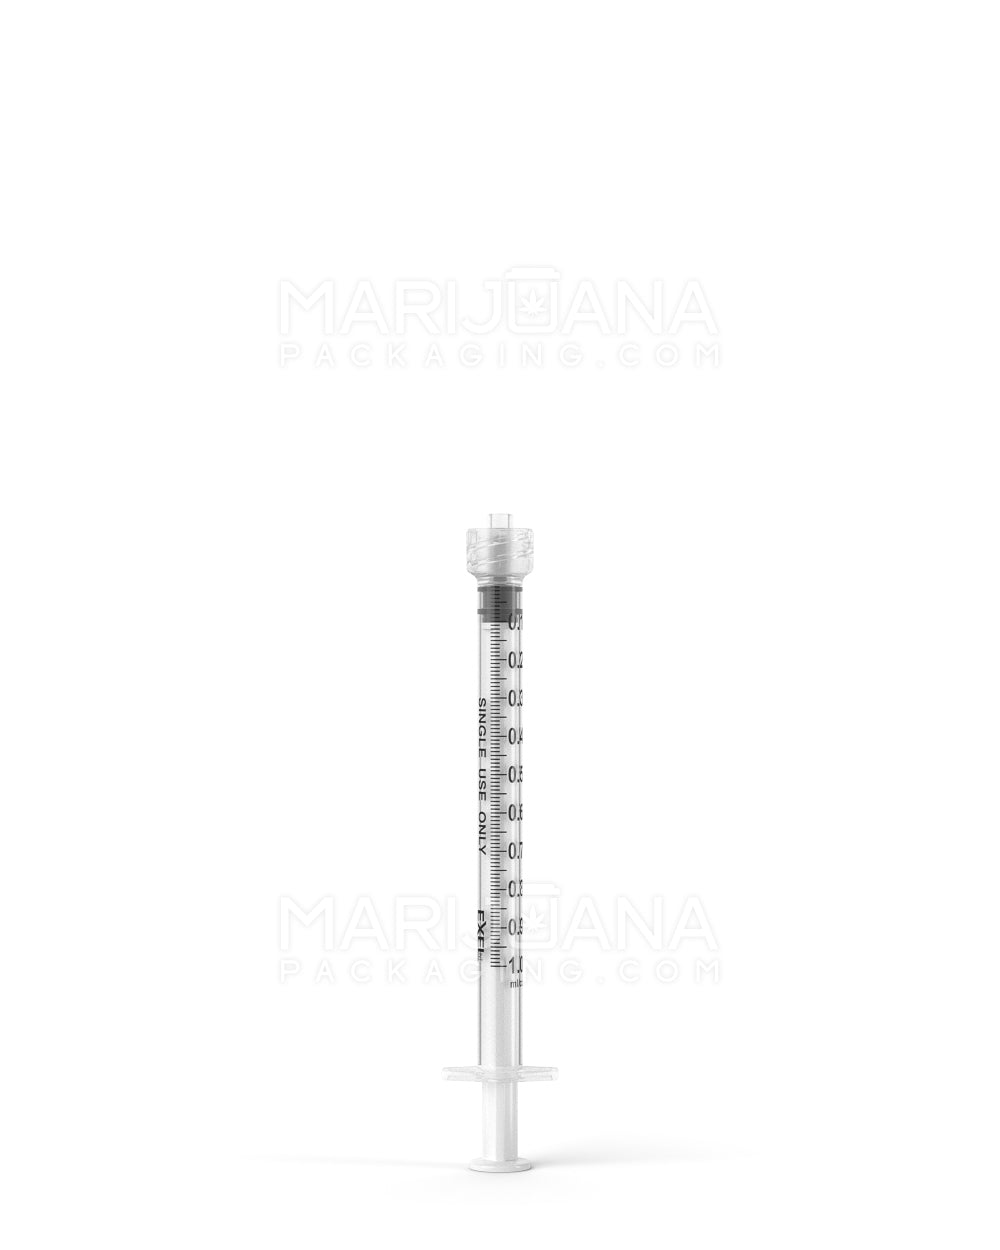 Luer Lock | Plastic Dab Applicator Syringes | 1mL - 0.1mL Increments - 100 Count - 8